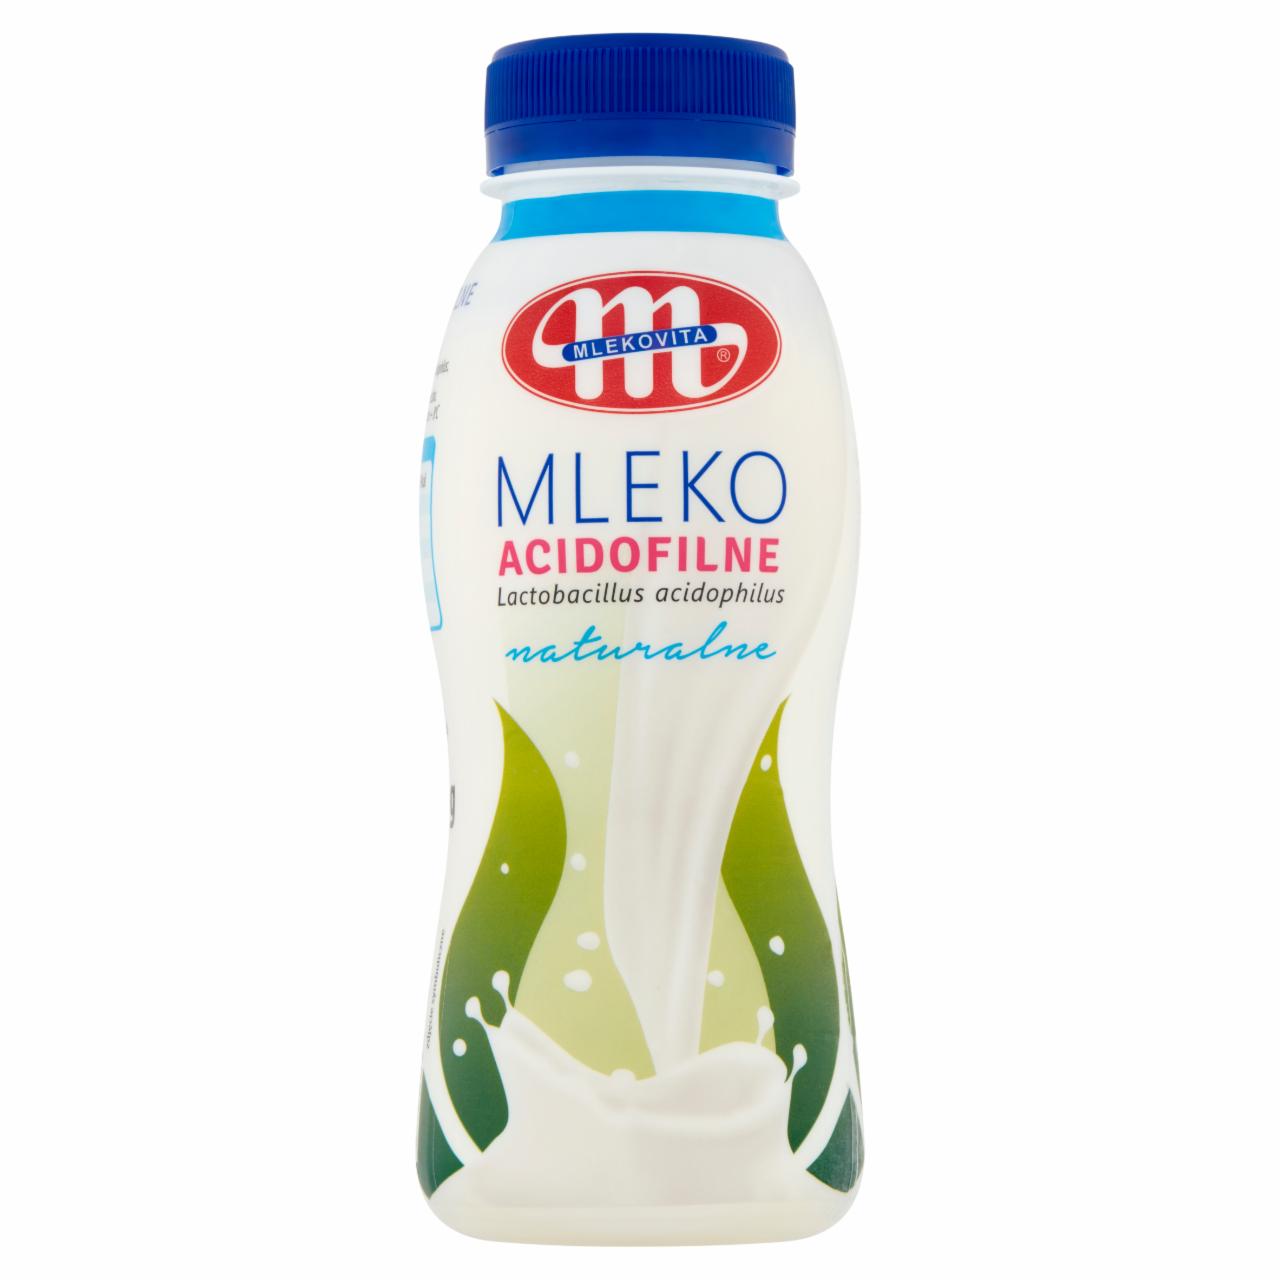 Zdjęcia - Mlekovita Mleko acidofilne naturalne 250 g